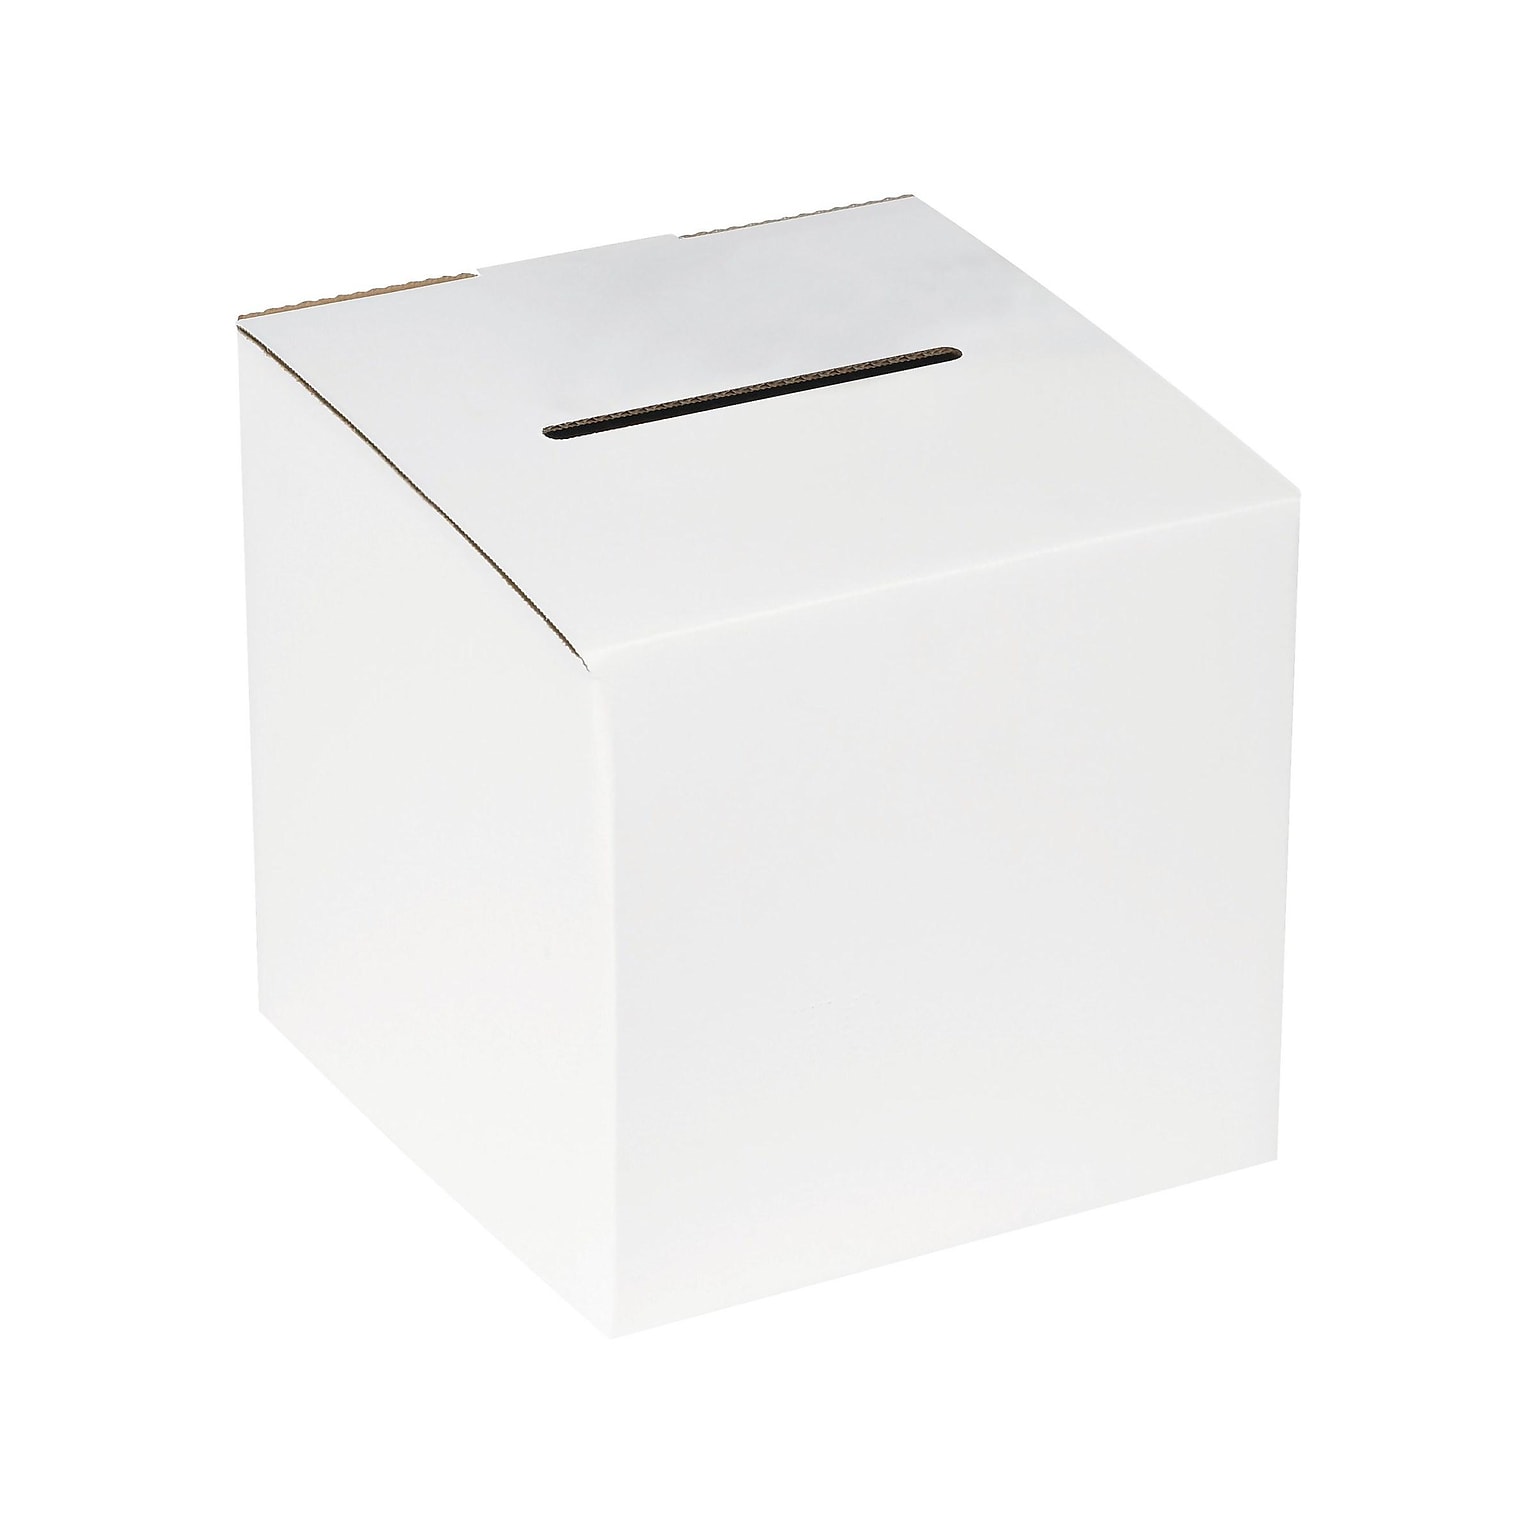 Staples Corrugated Cardboard Ballot Box, White (MBALLOT)